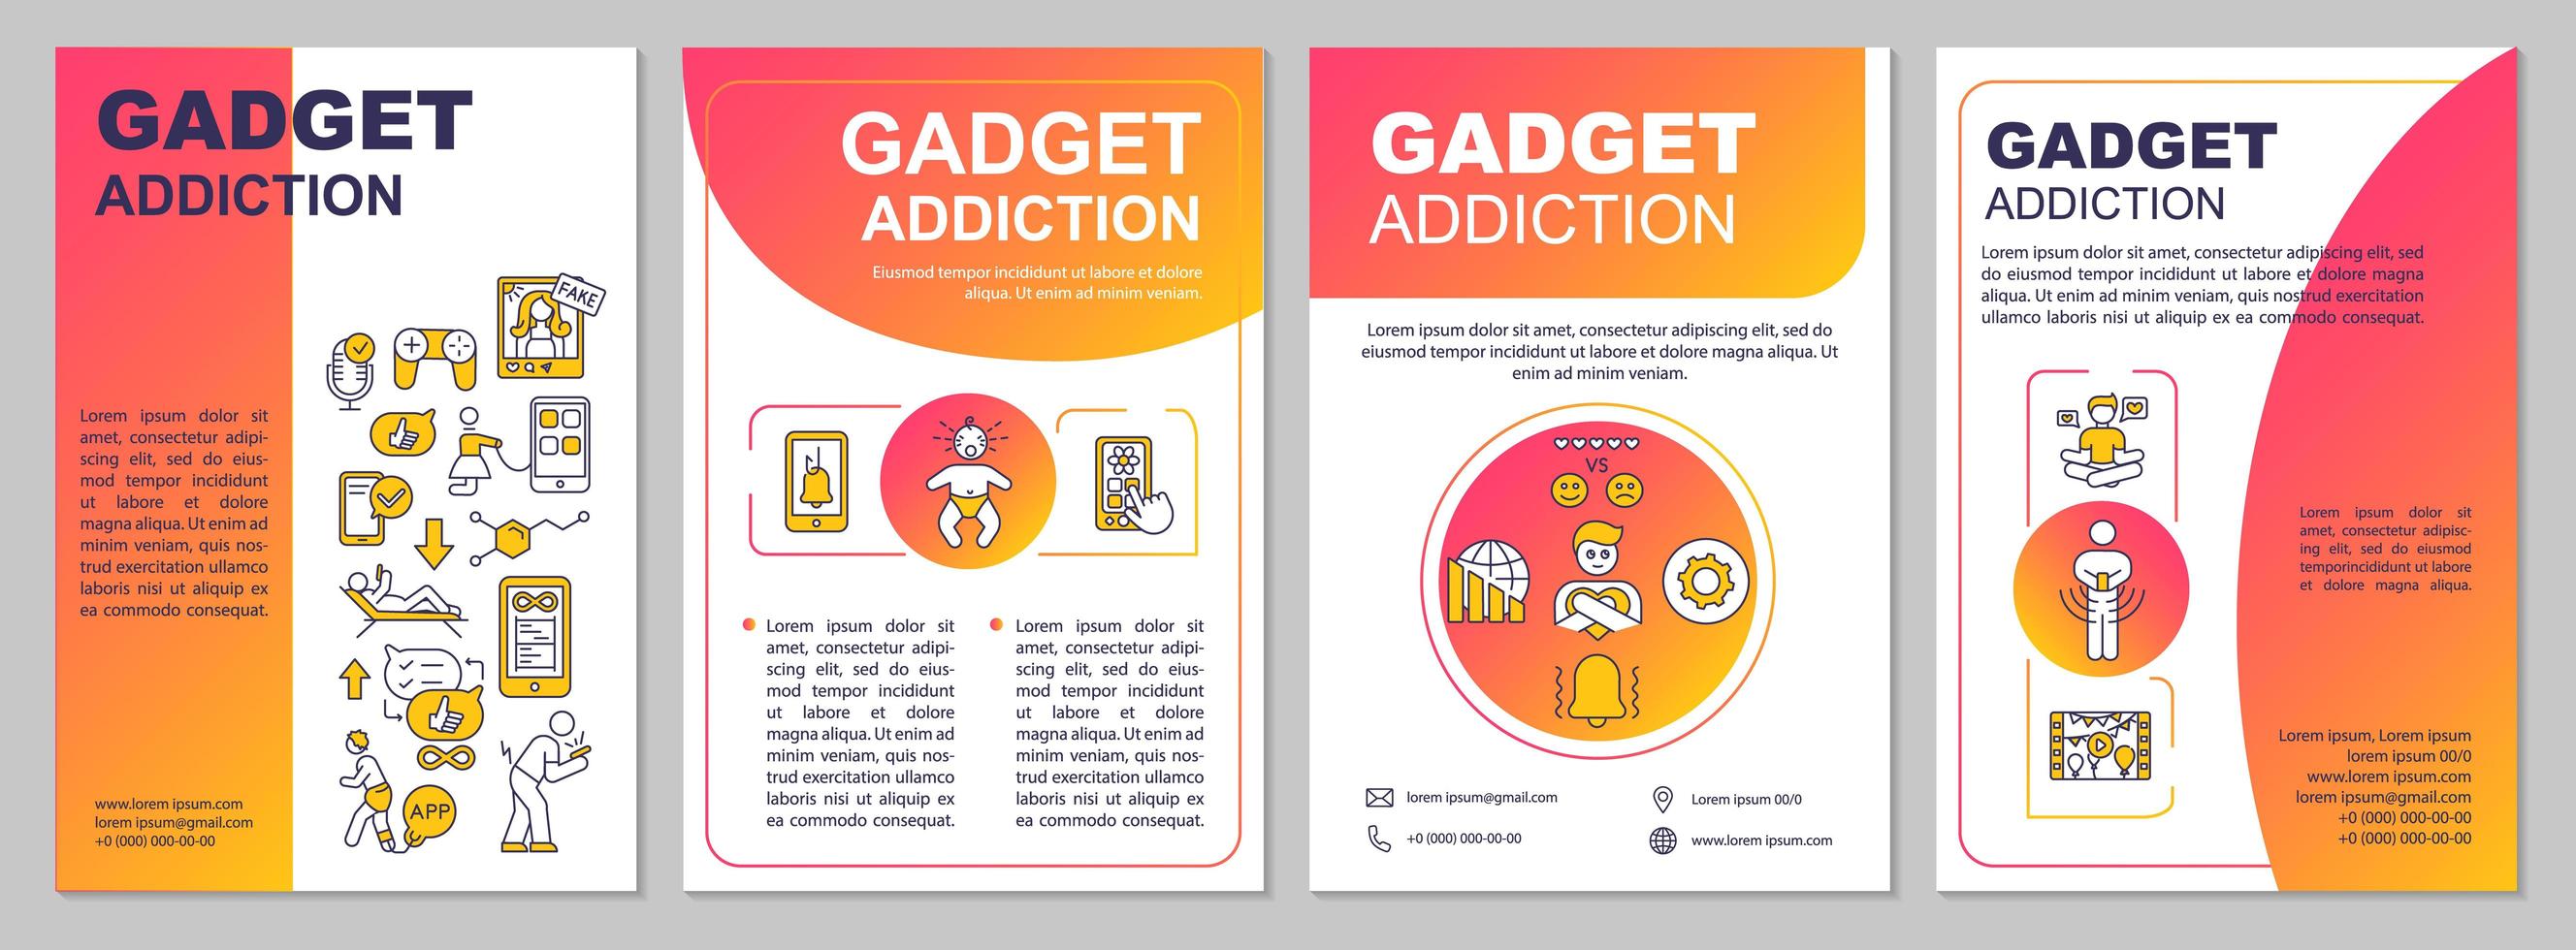 Gadget addiction brochure template vector